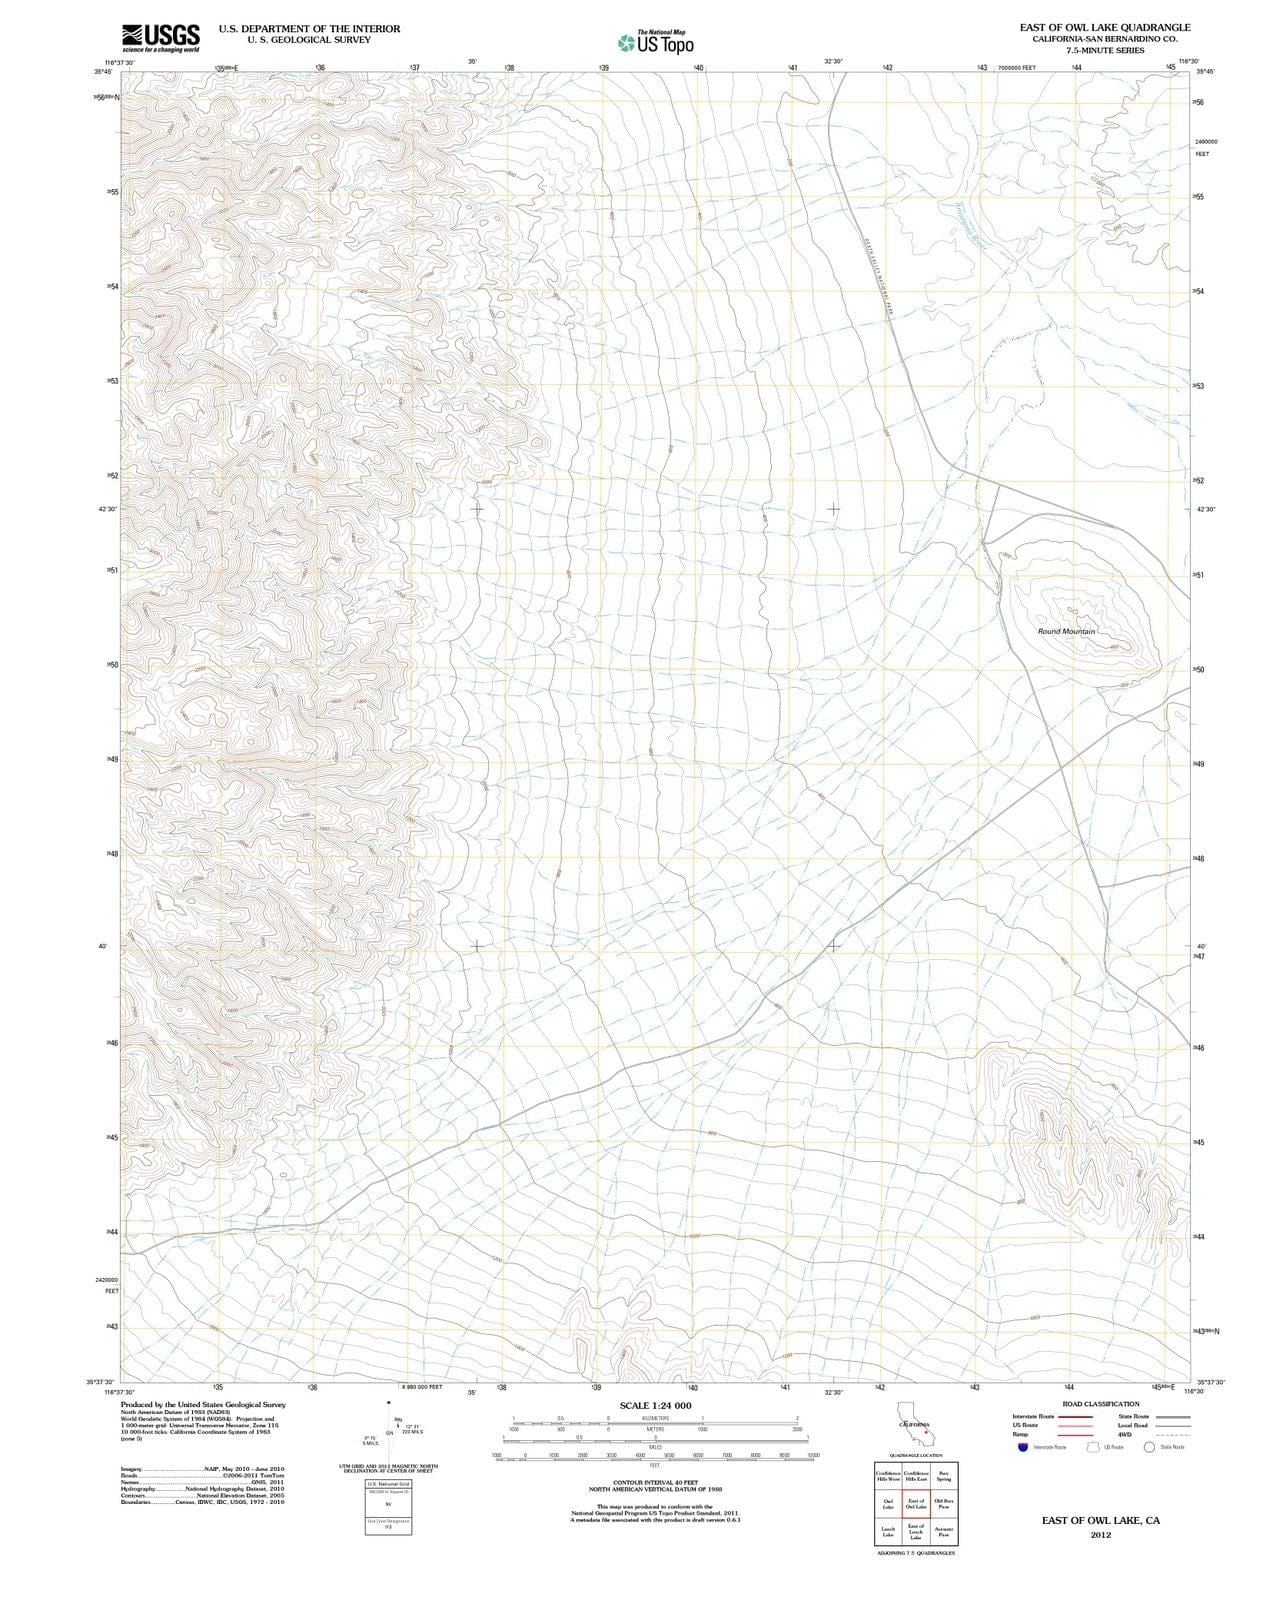 2012 East of Owl Lake, CA - California - USGS Topographic Map